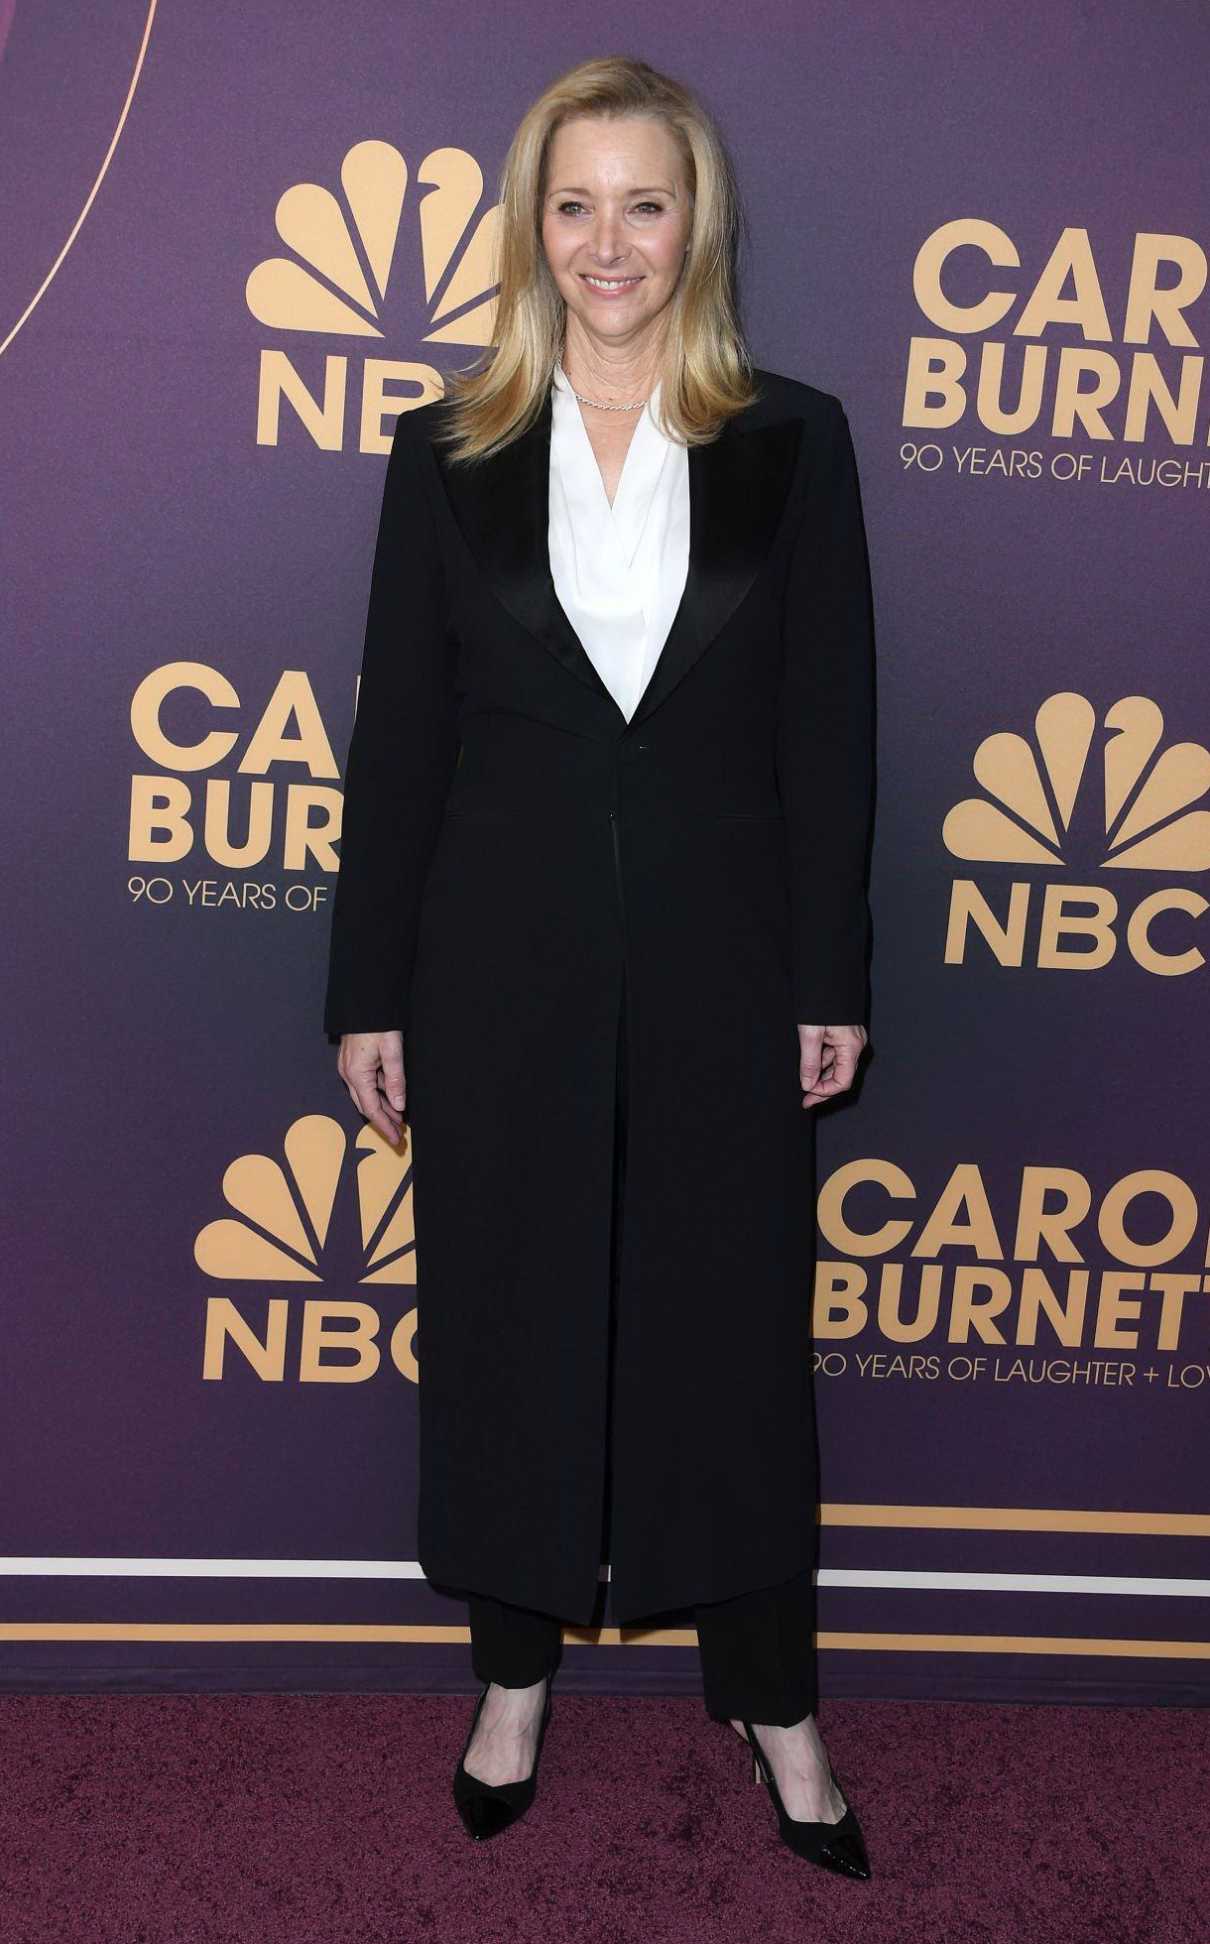 Lisa Kudrow Attends Carol Burnett: 90 Years of Laughter + Love Birthday ...